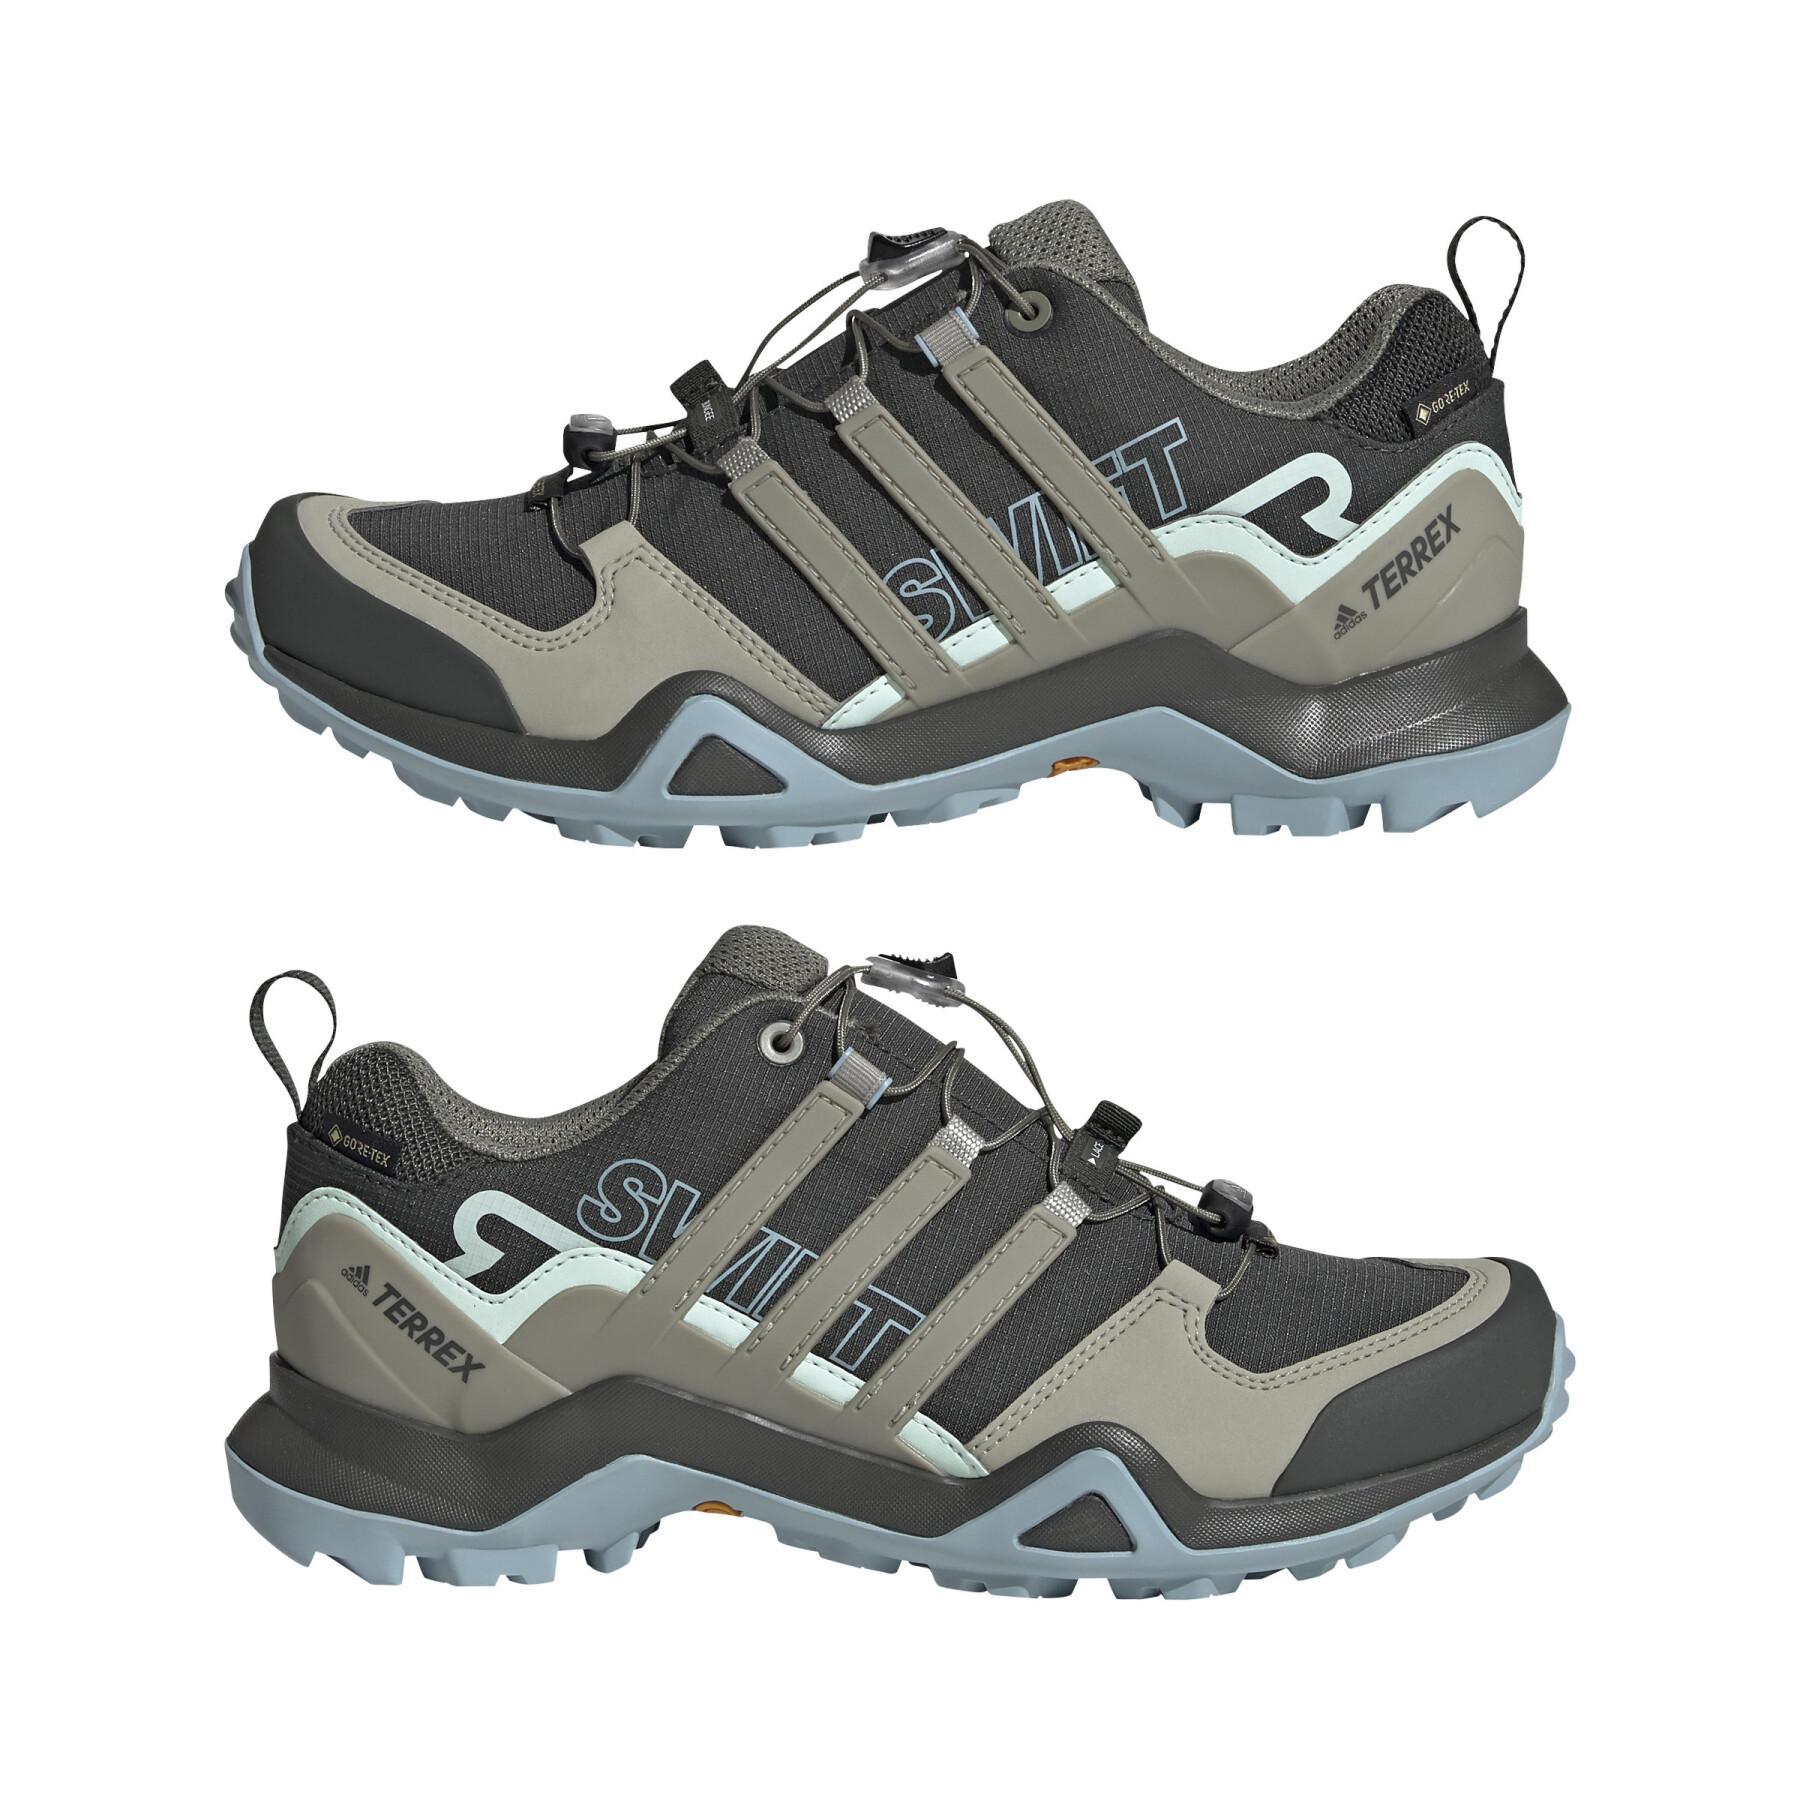 Women's Trail running shoes adidas Terrex Swift R2 GTX